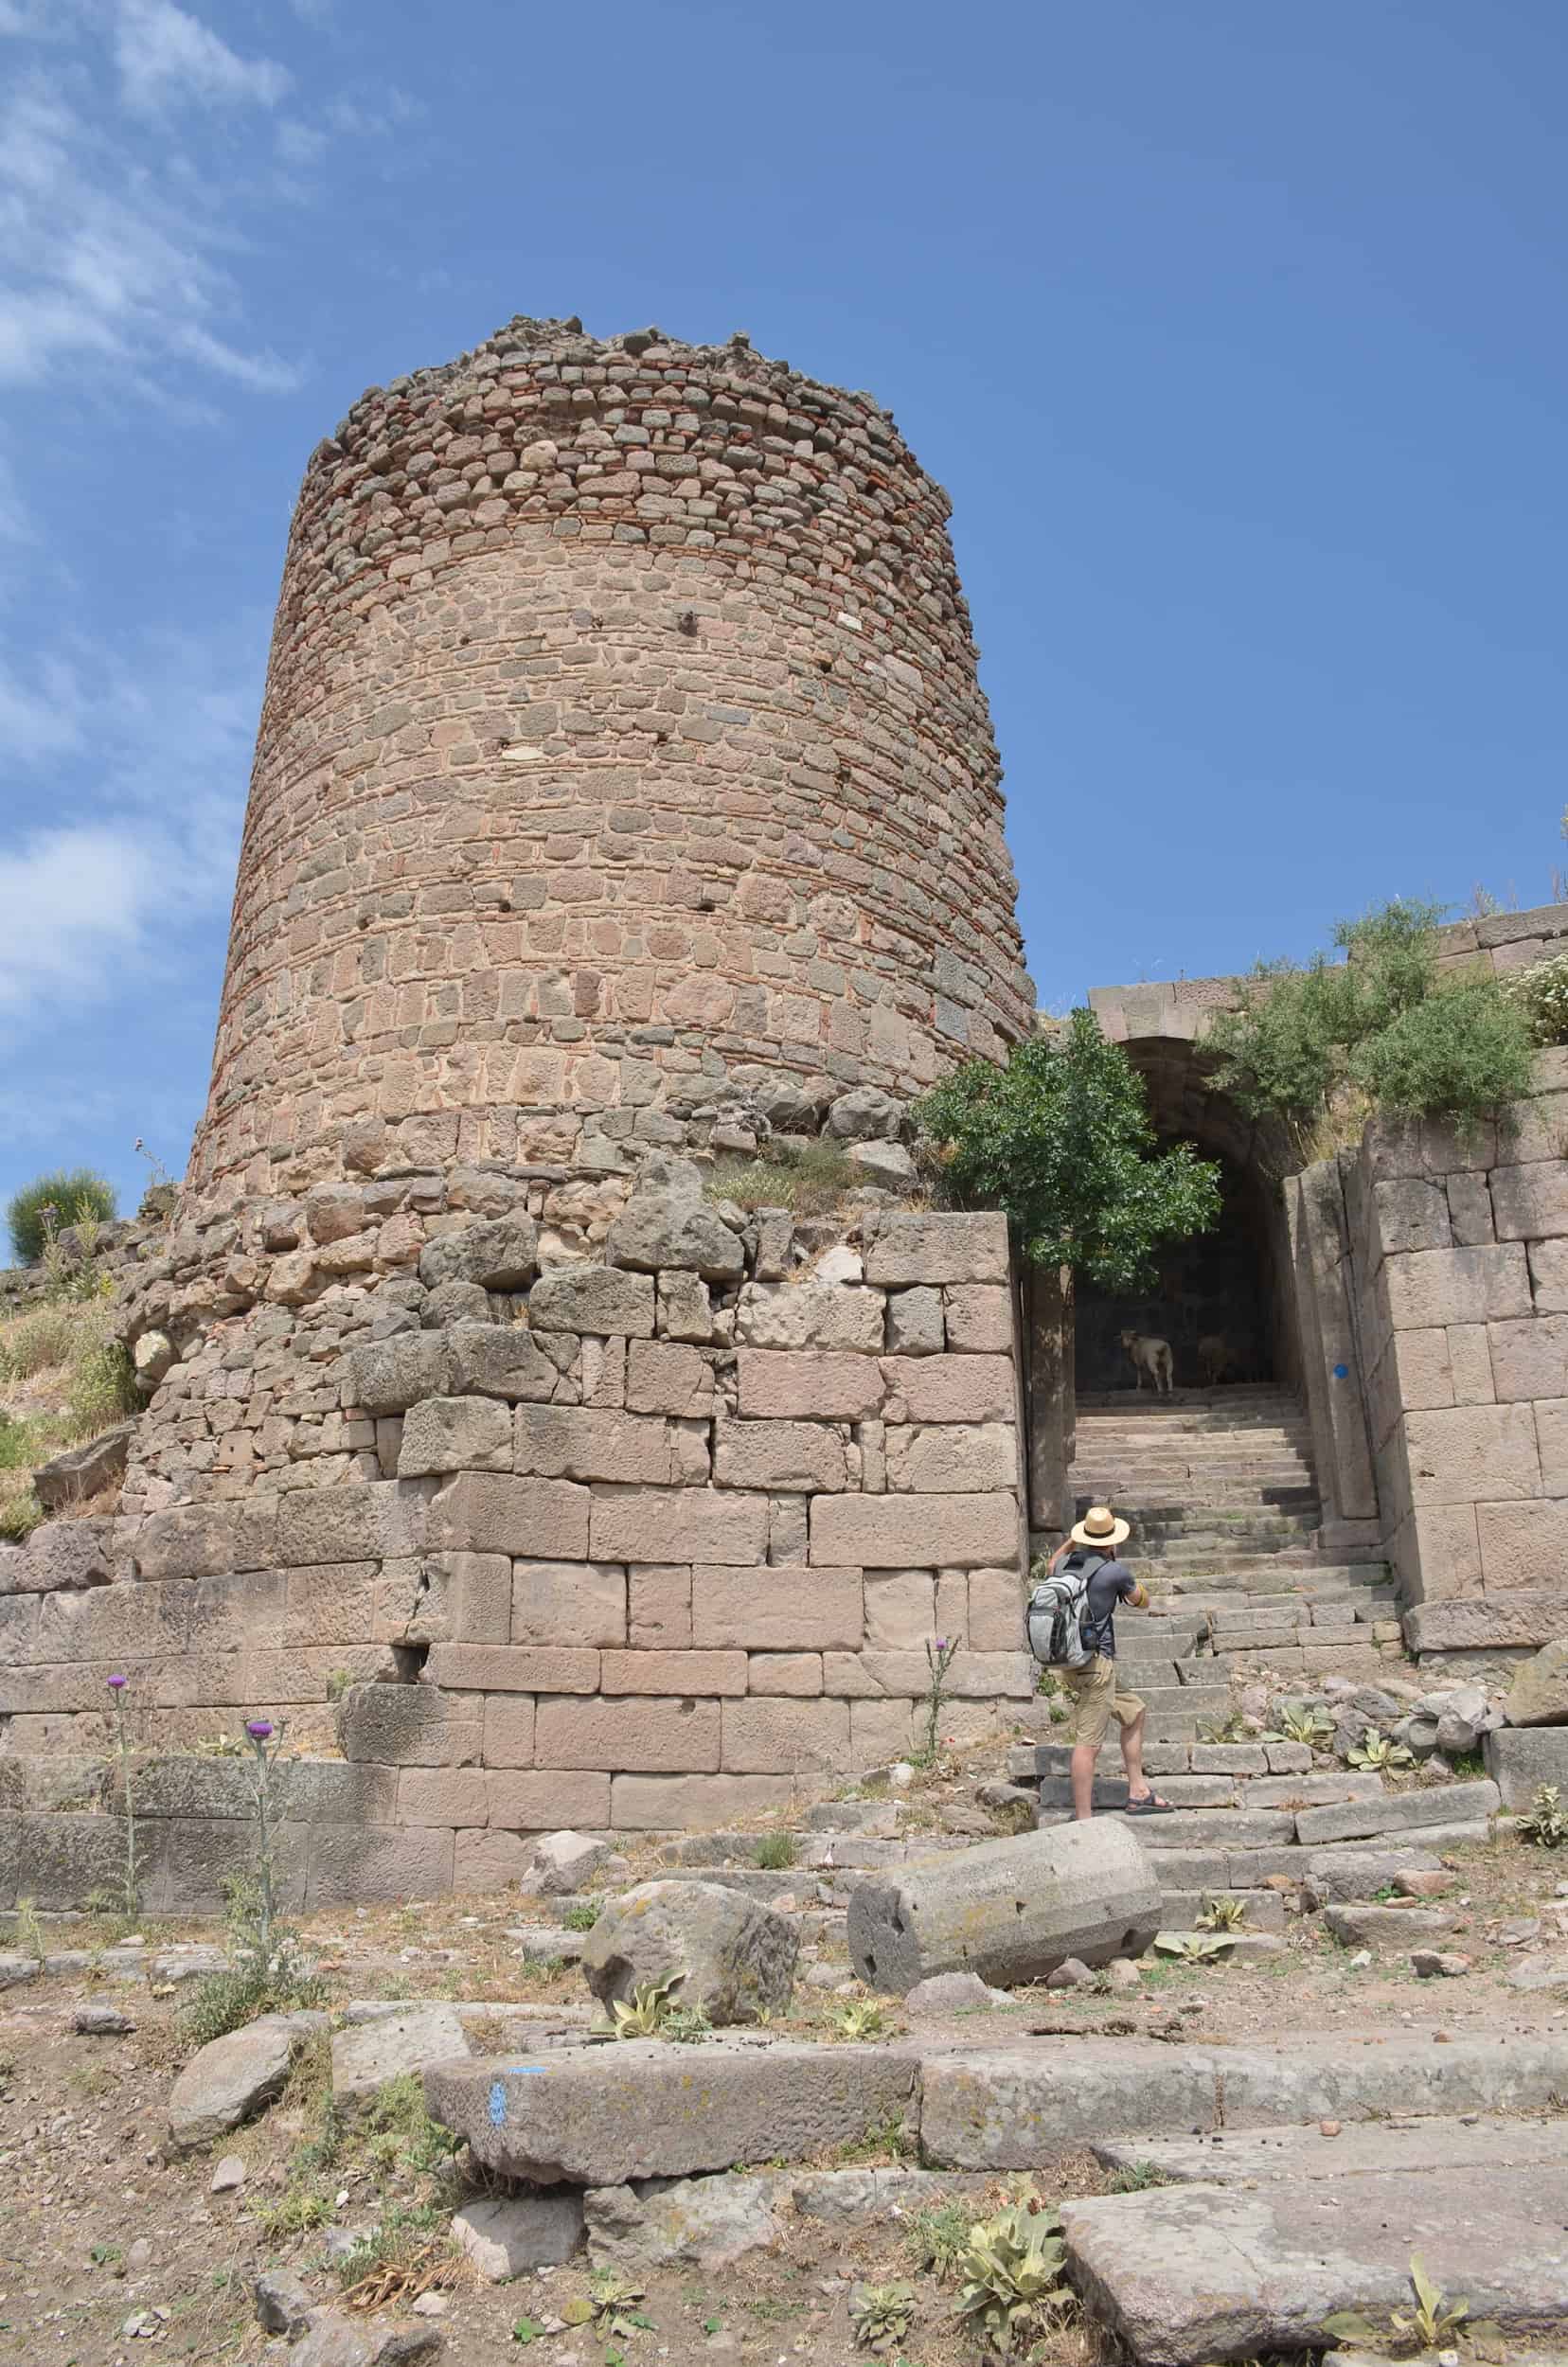 Stairway and Byzantine tower at the Pergamon Gymnasium